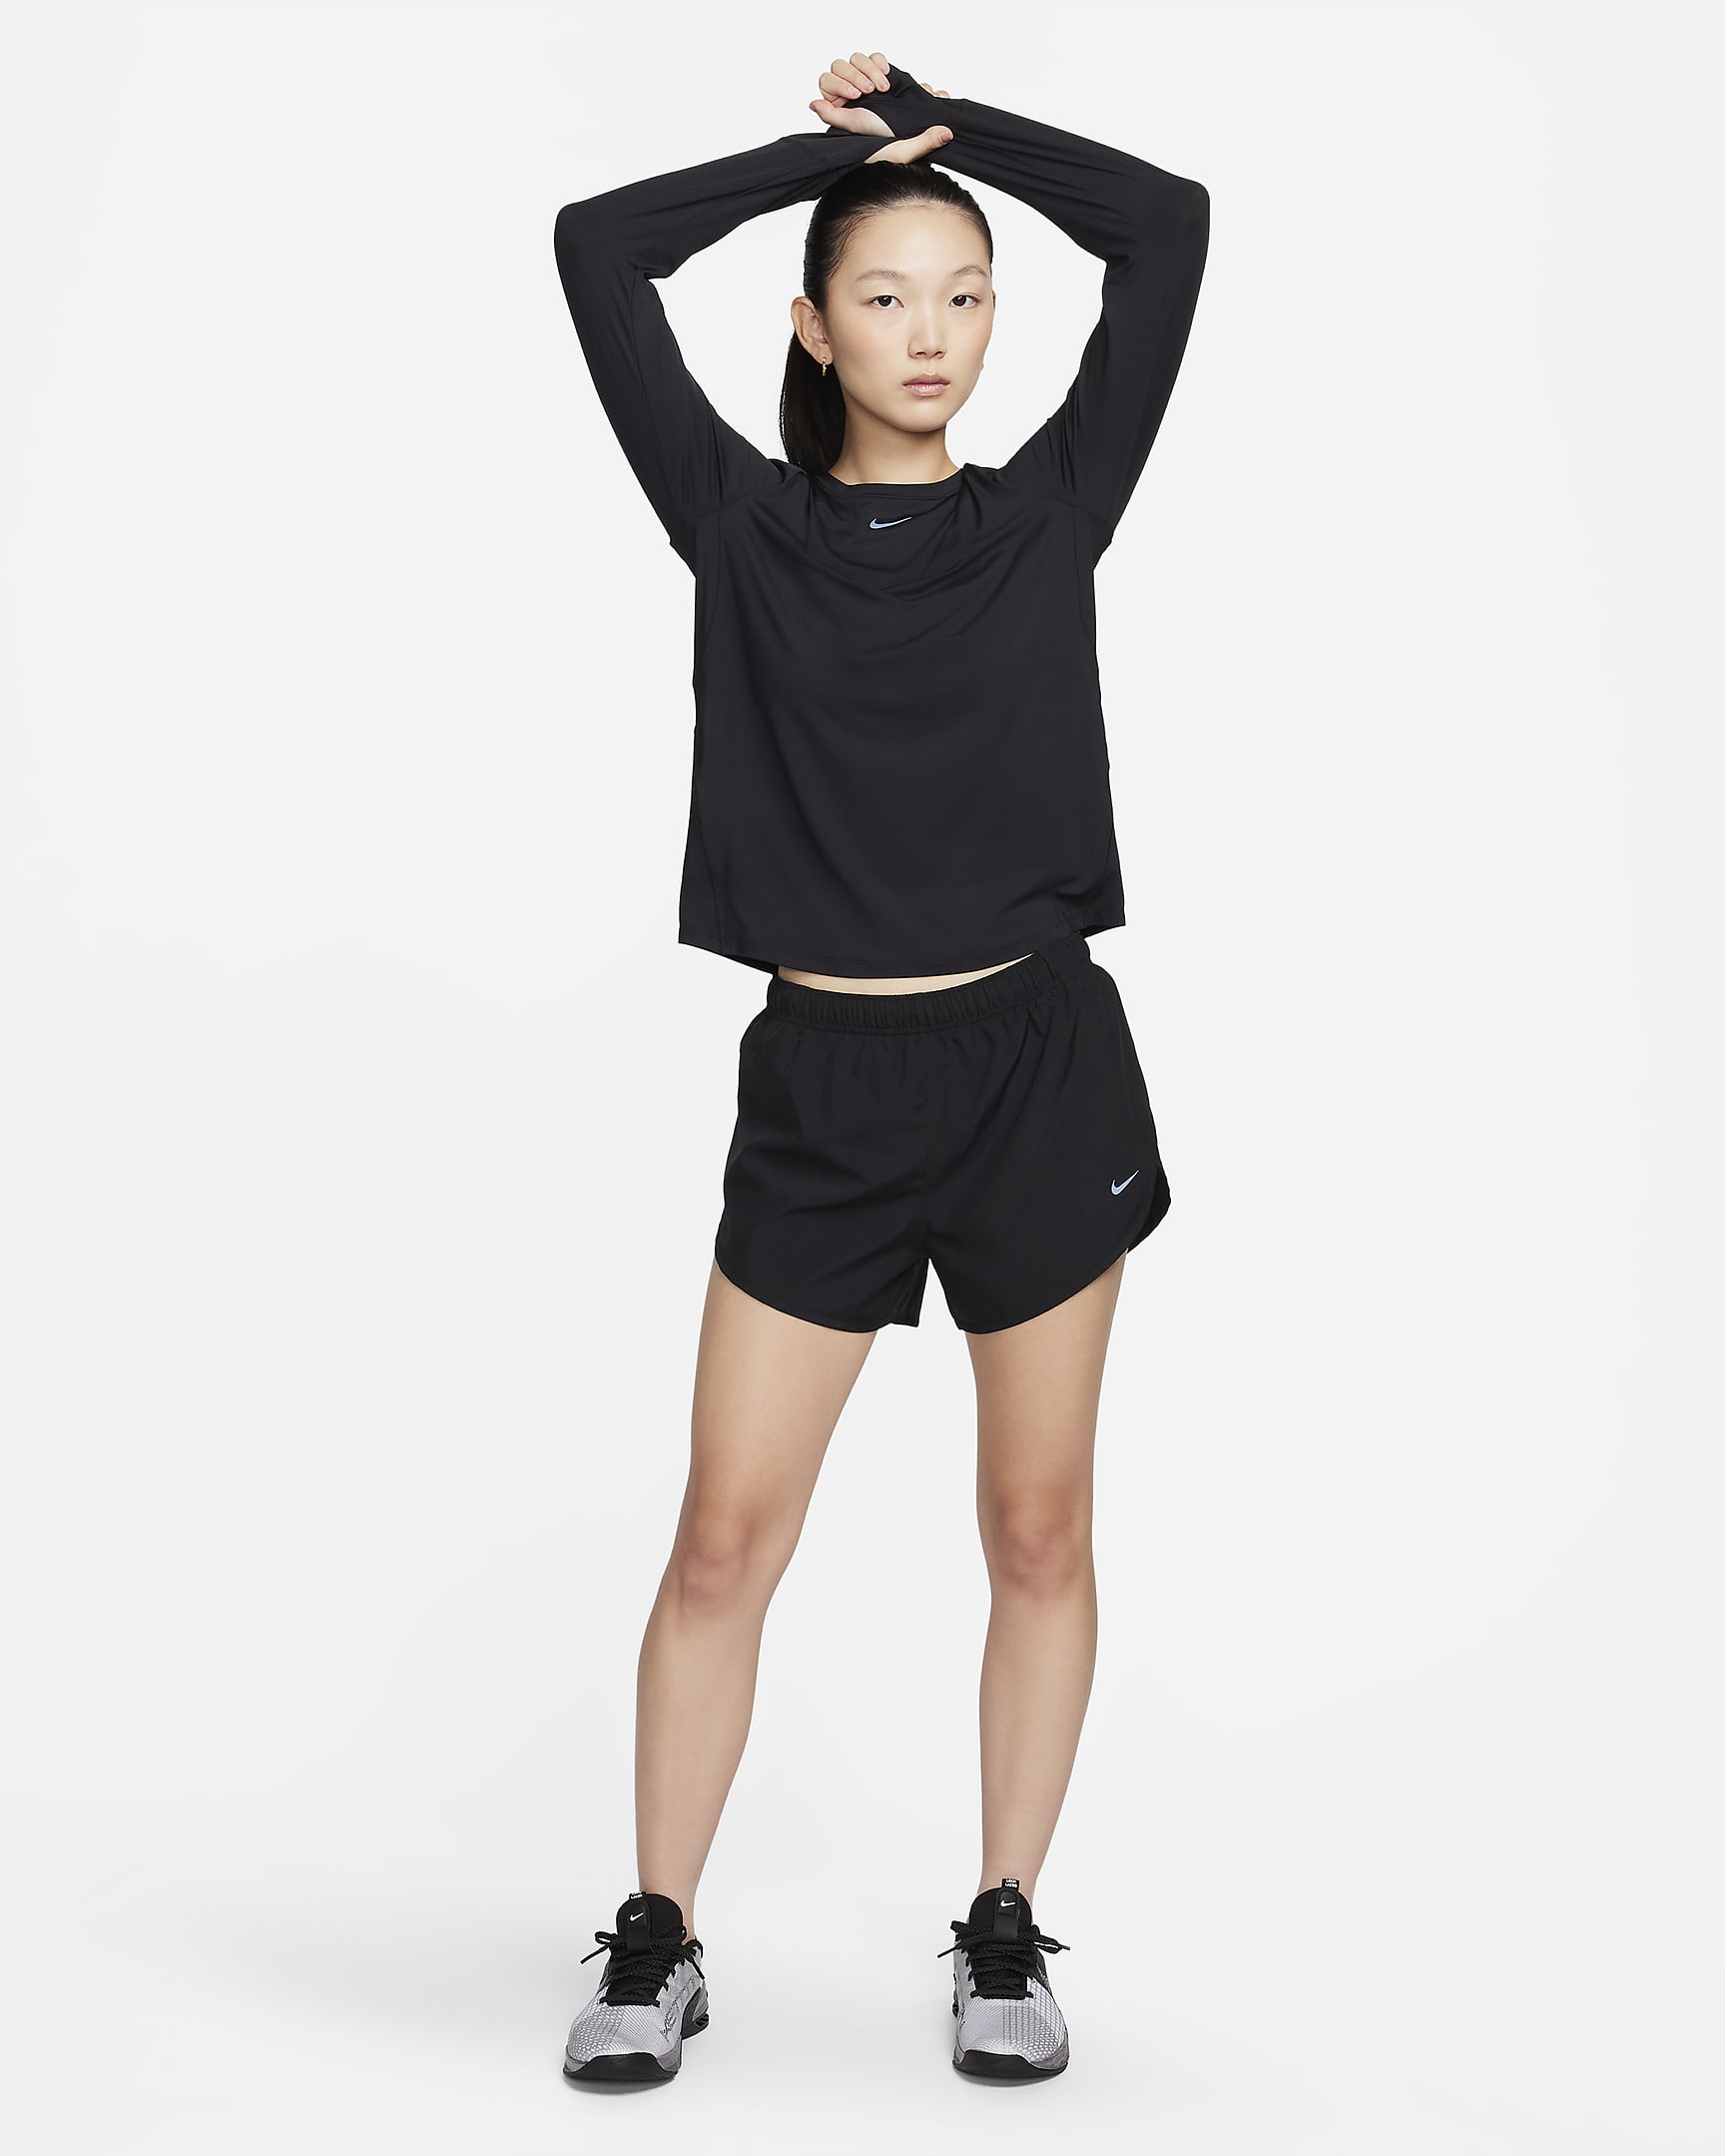 Nike One Classic Women's Dri-FIT Long-Sleeve Top. Nike JP